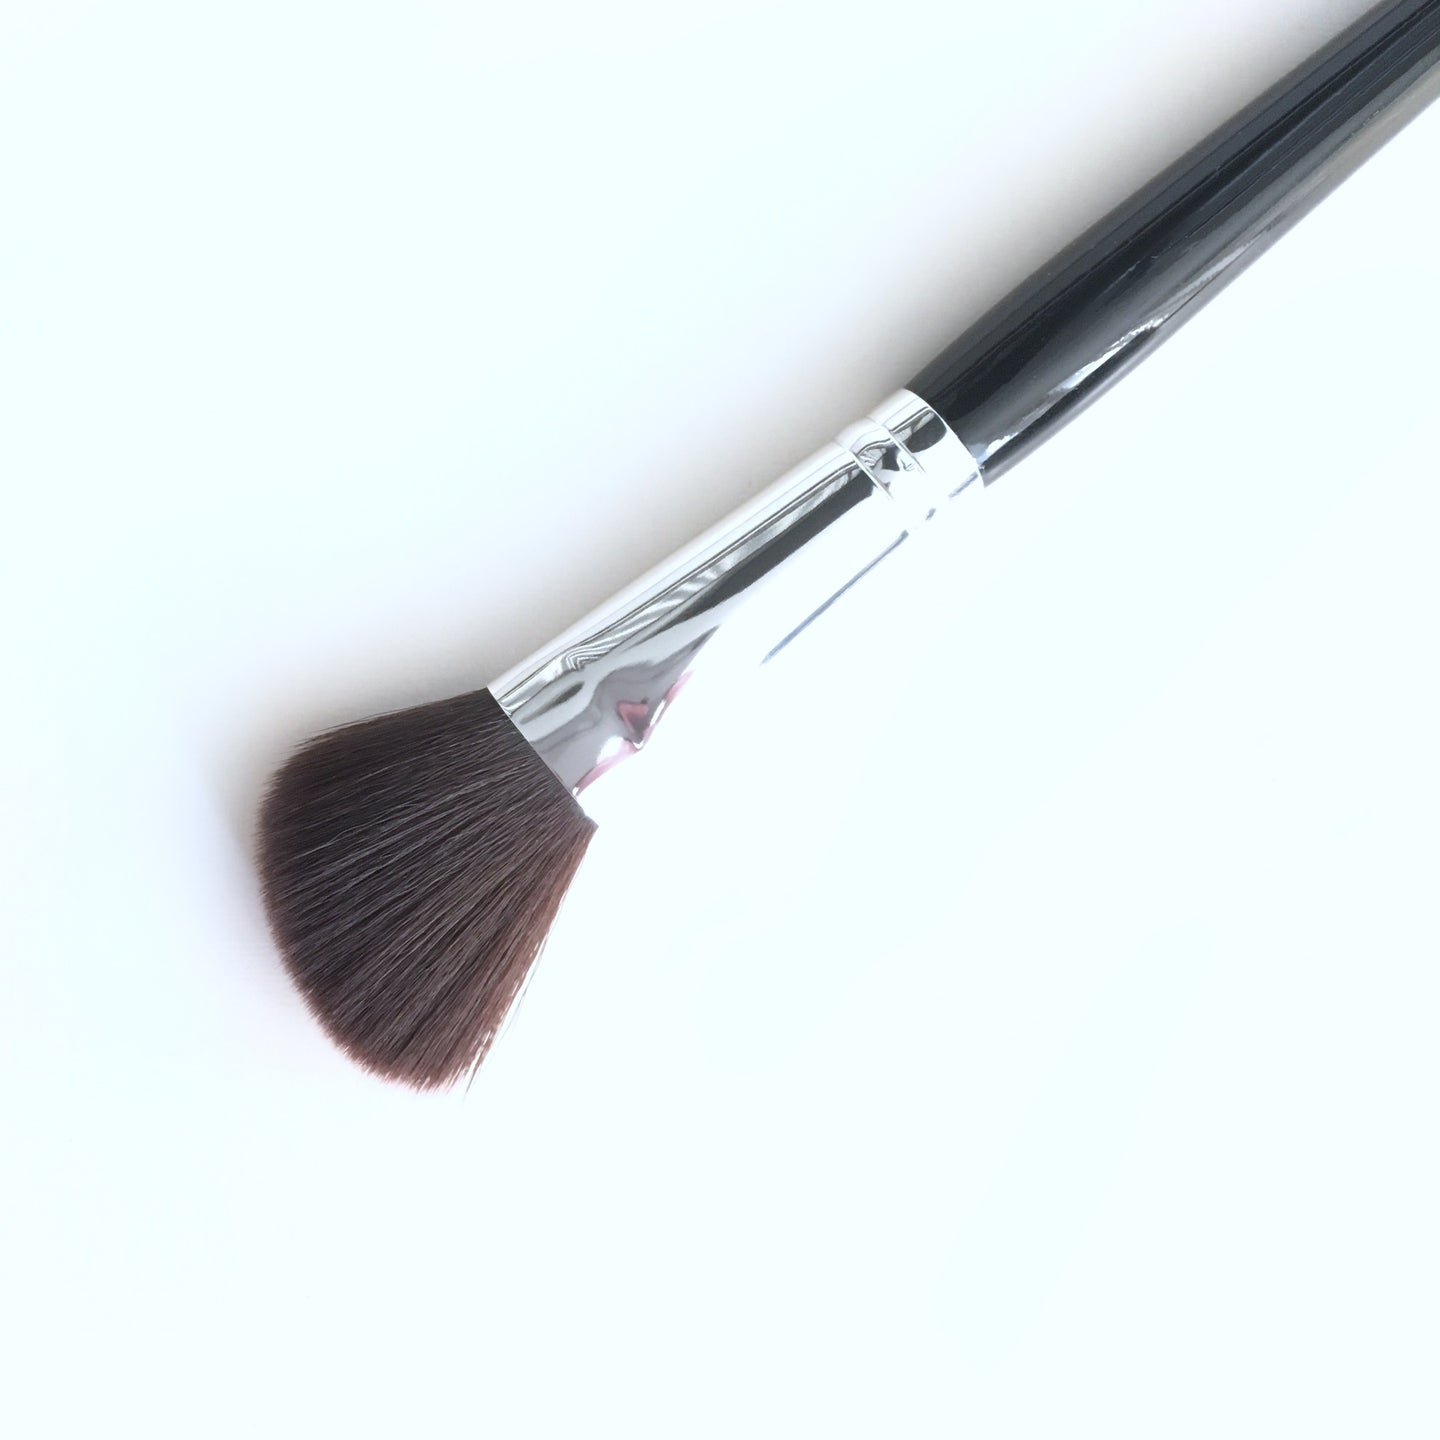 RIGHT ANGLES blush/contour brush - M.E. cosmetics